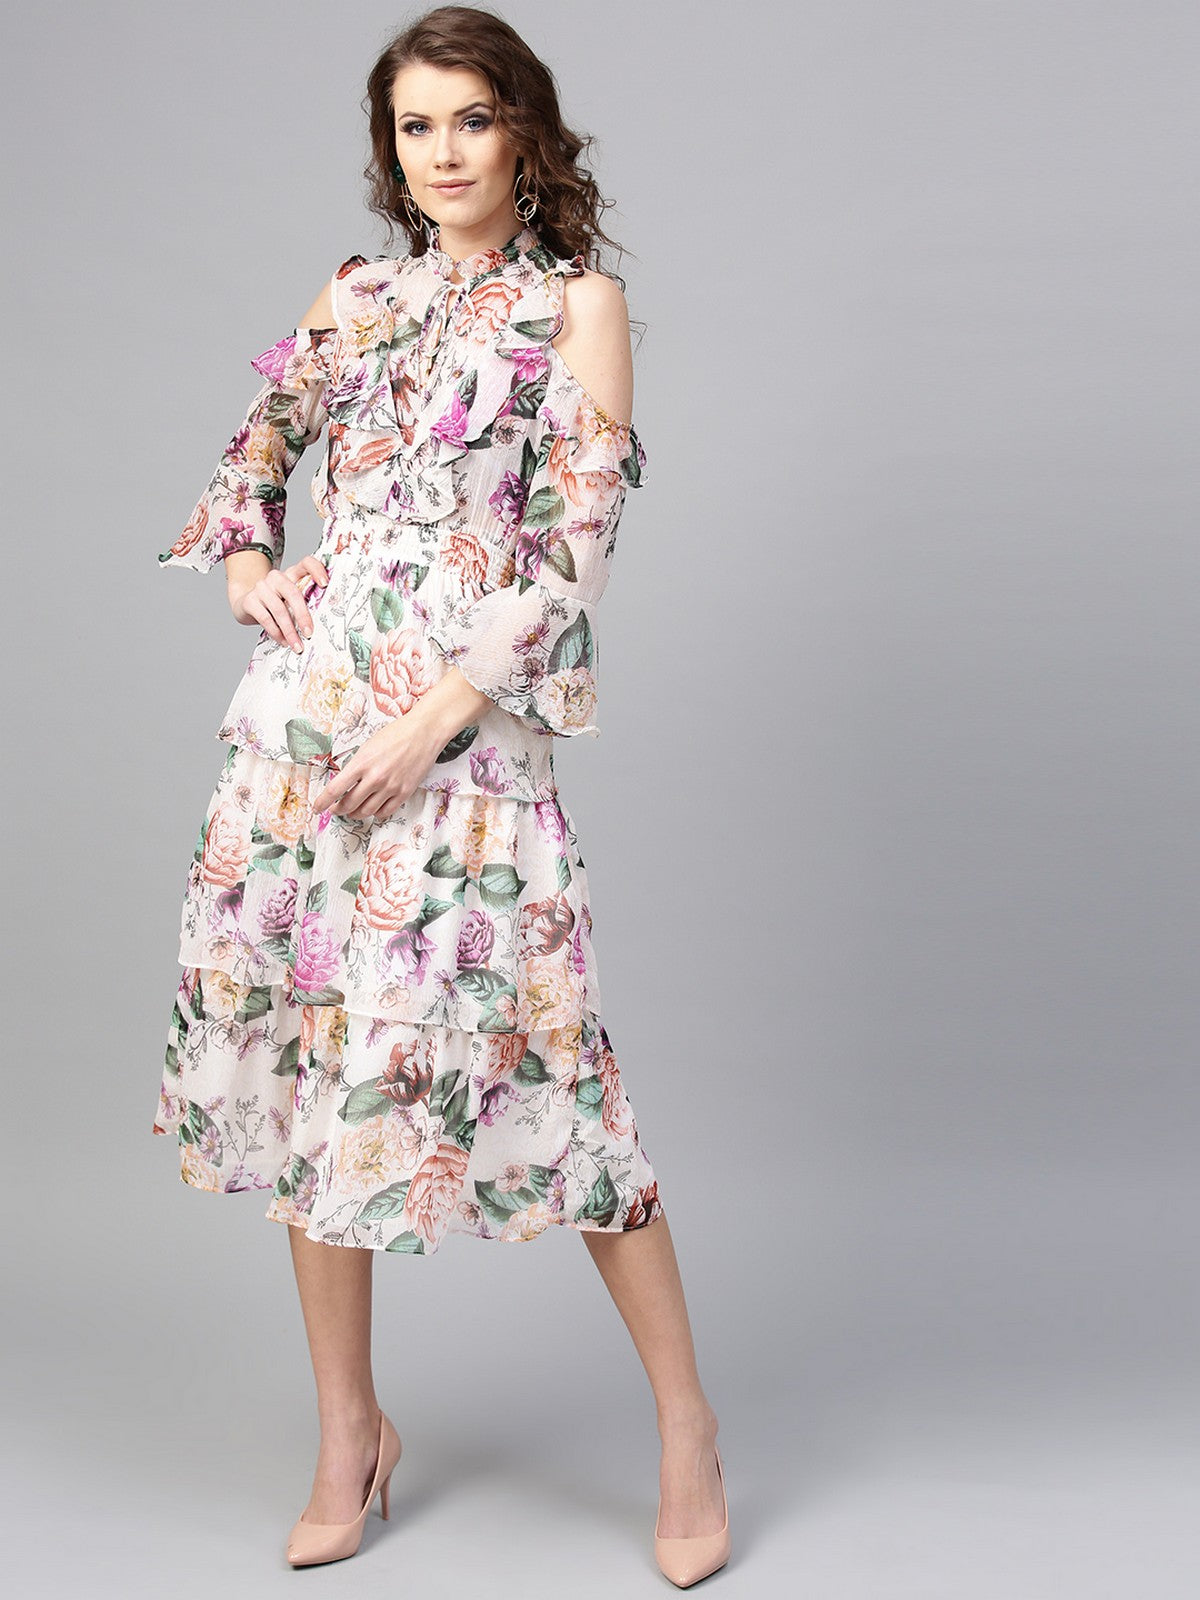 Floral Printed Chiffon Dress | Clothing - Dresses, Dresses, Dresses-A, L, M, Off-White/Multi, Polyester/Chiffon, S, SS-20-A, XL, XS | PNK